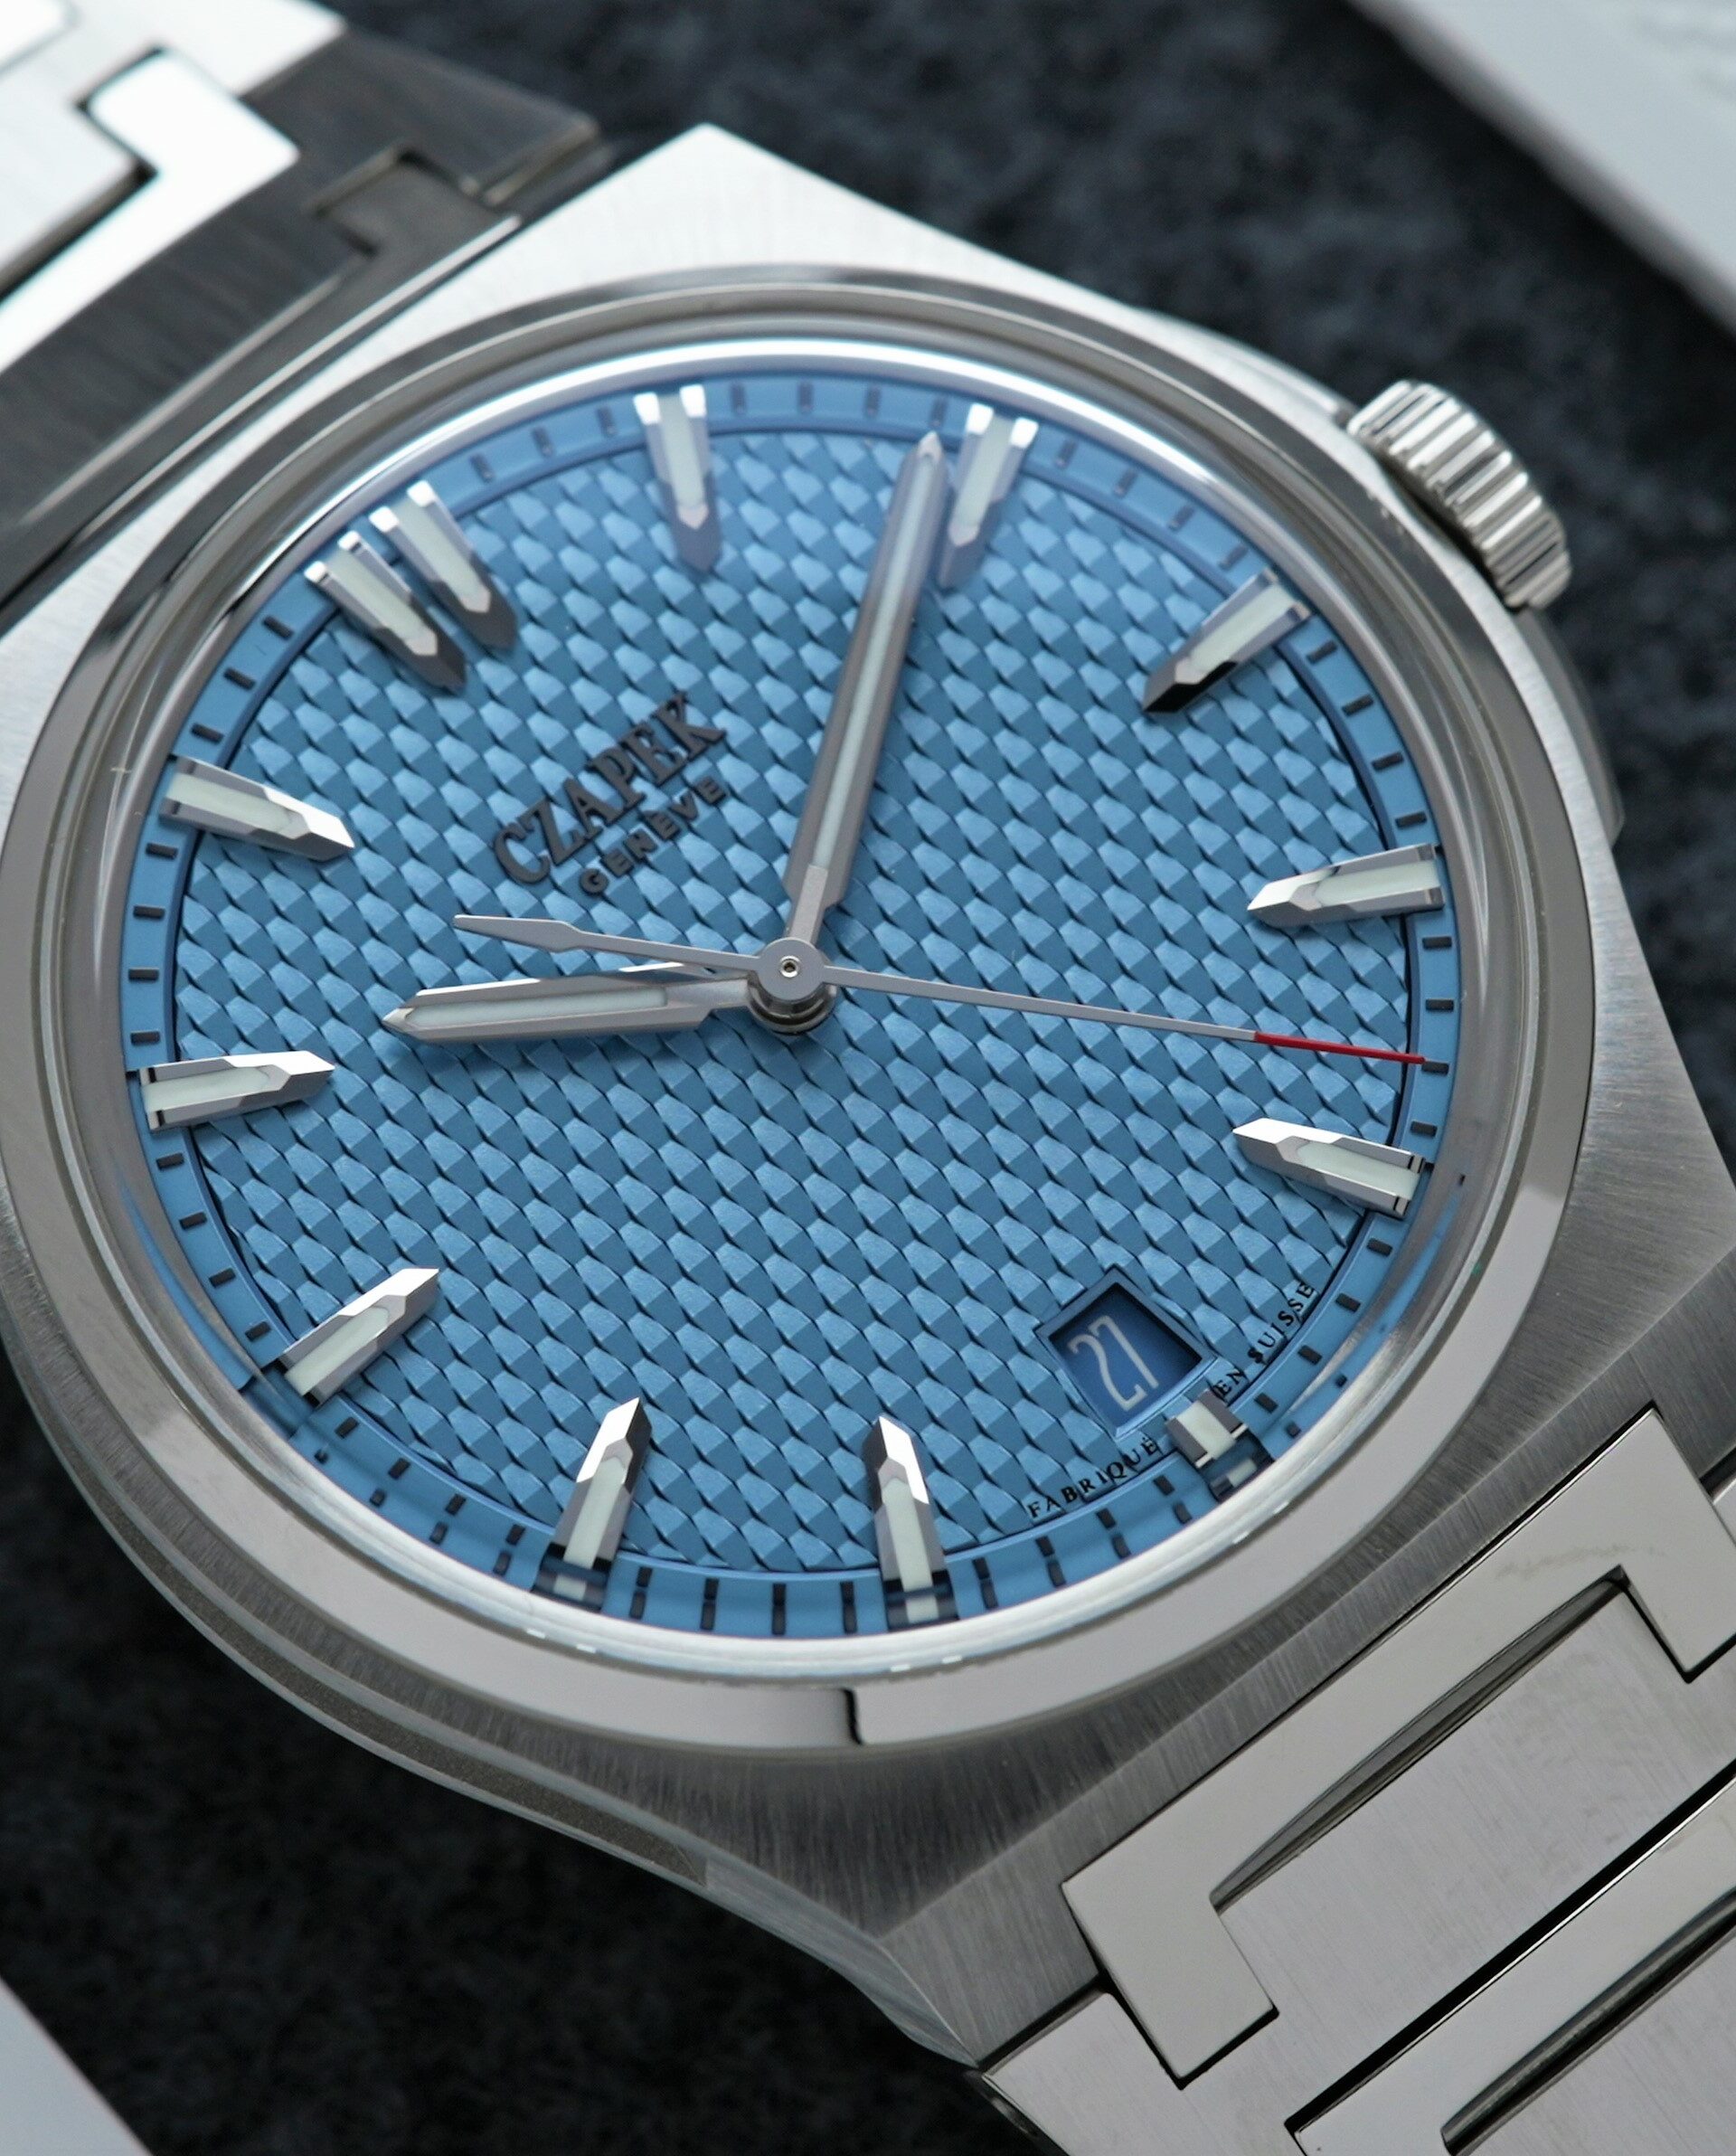 Czapek Passage de Drake Rare Glacier Blue Limited Production watch featured with extra white rubber strap.